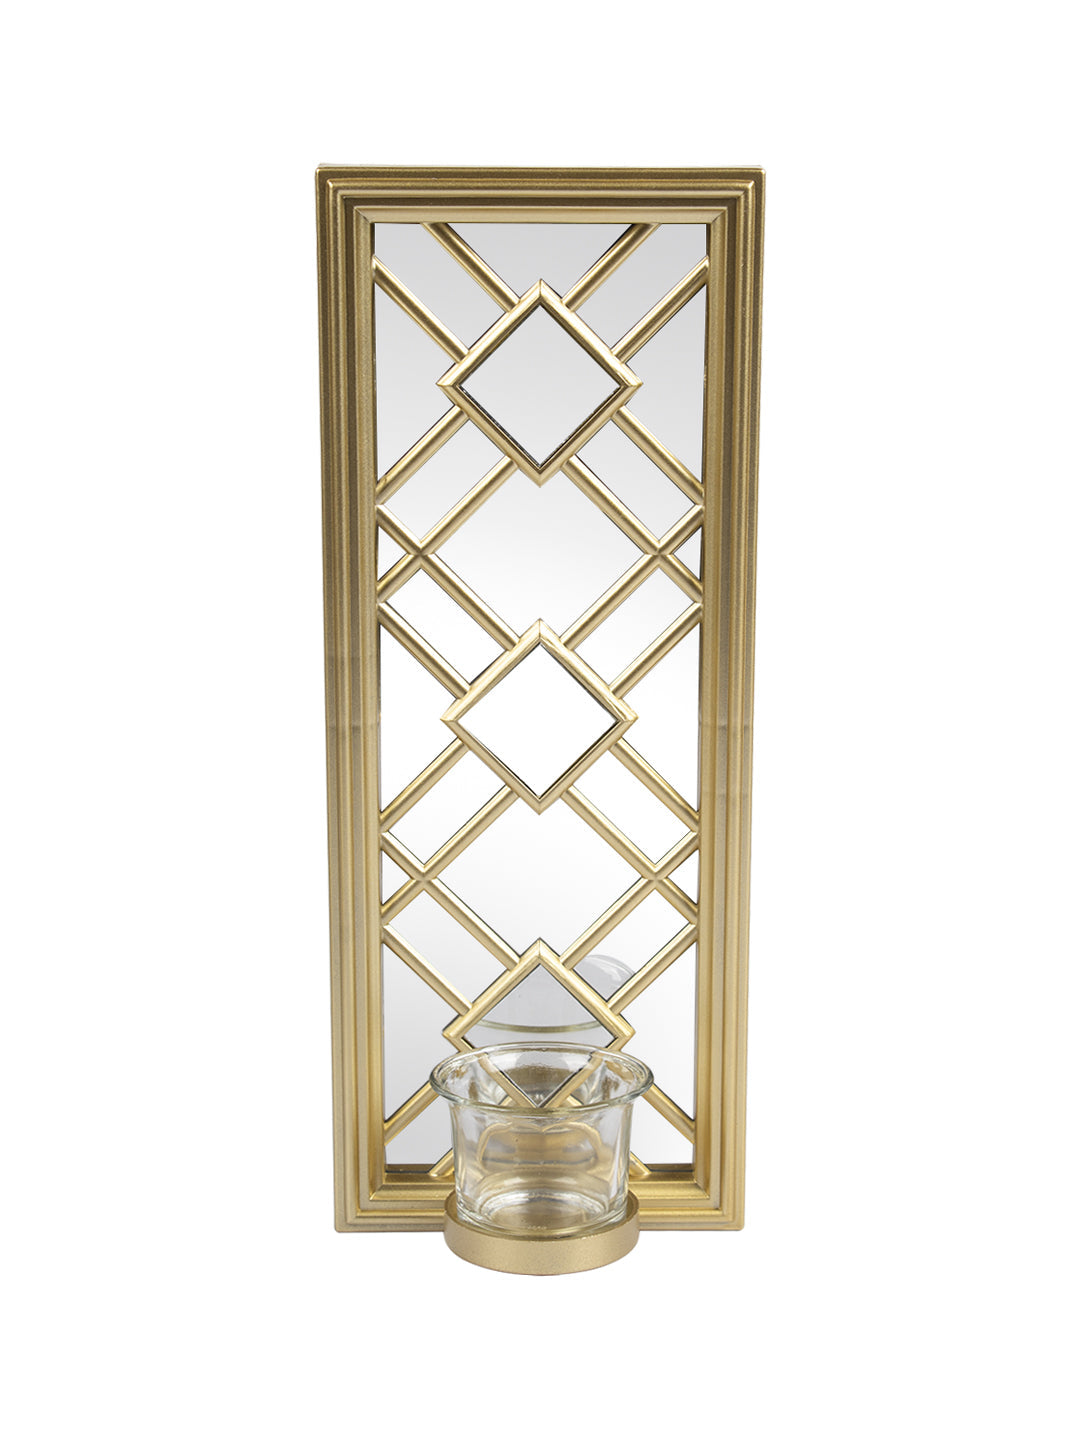 VON CASA Decorative Vertical Wall Sconce Candle Holder